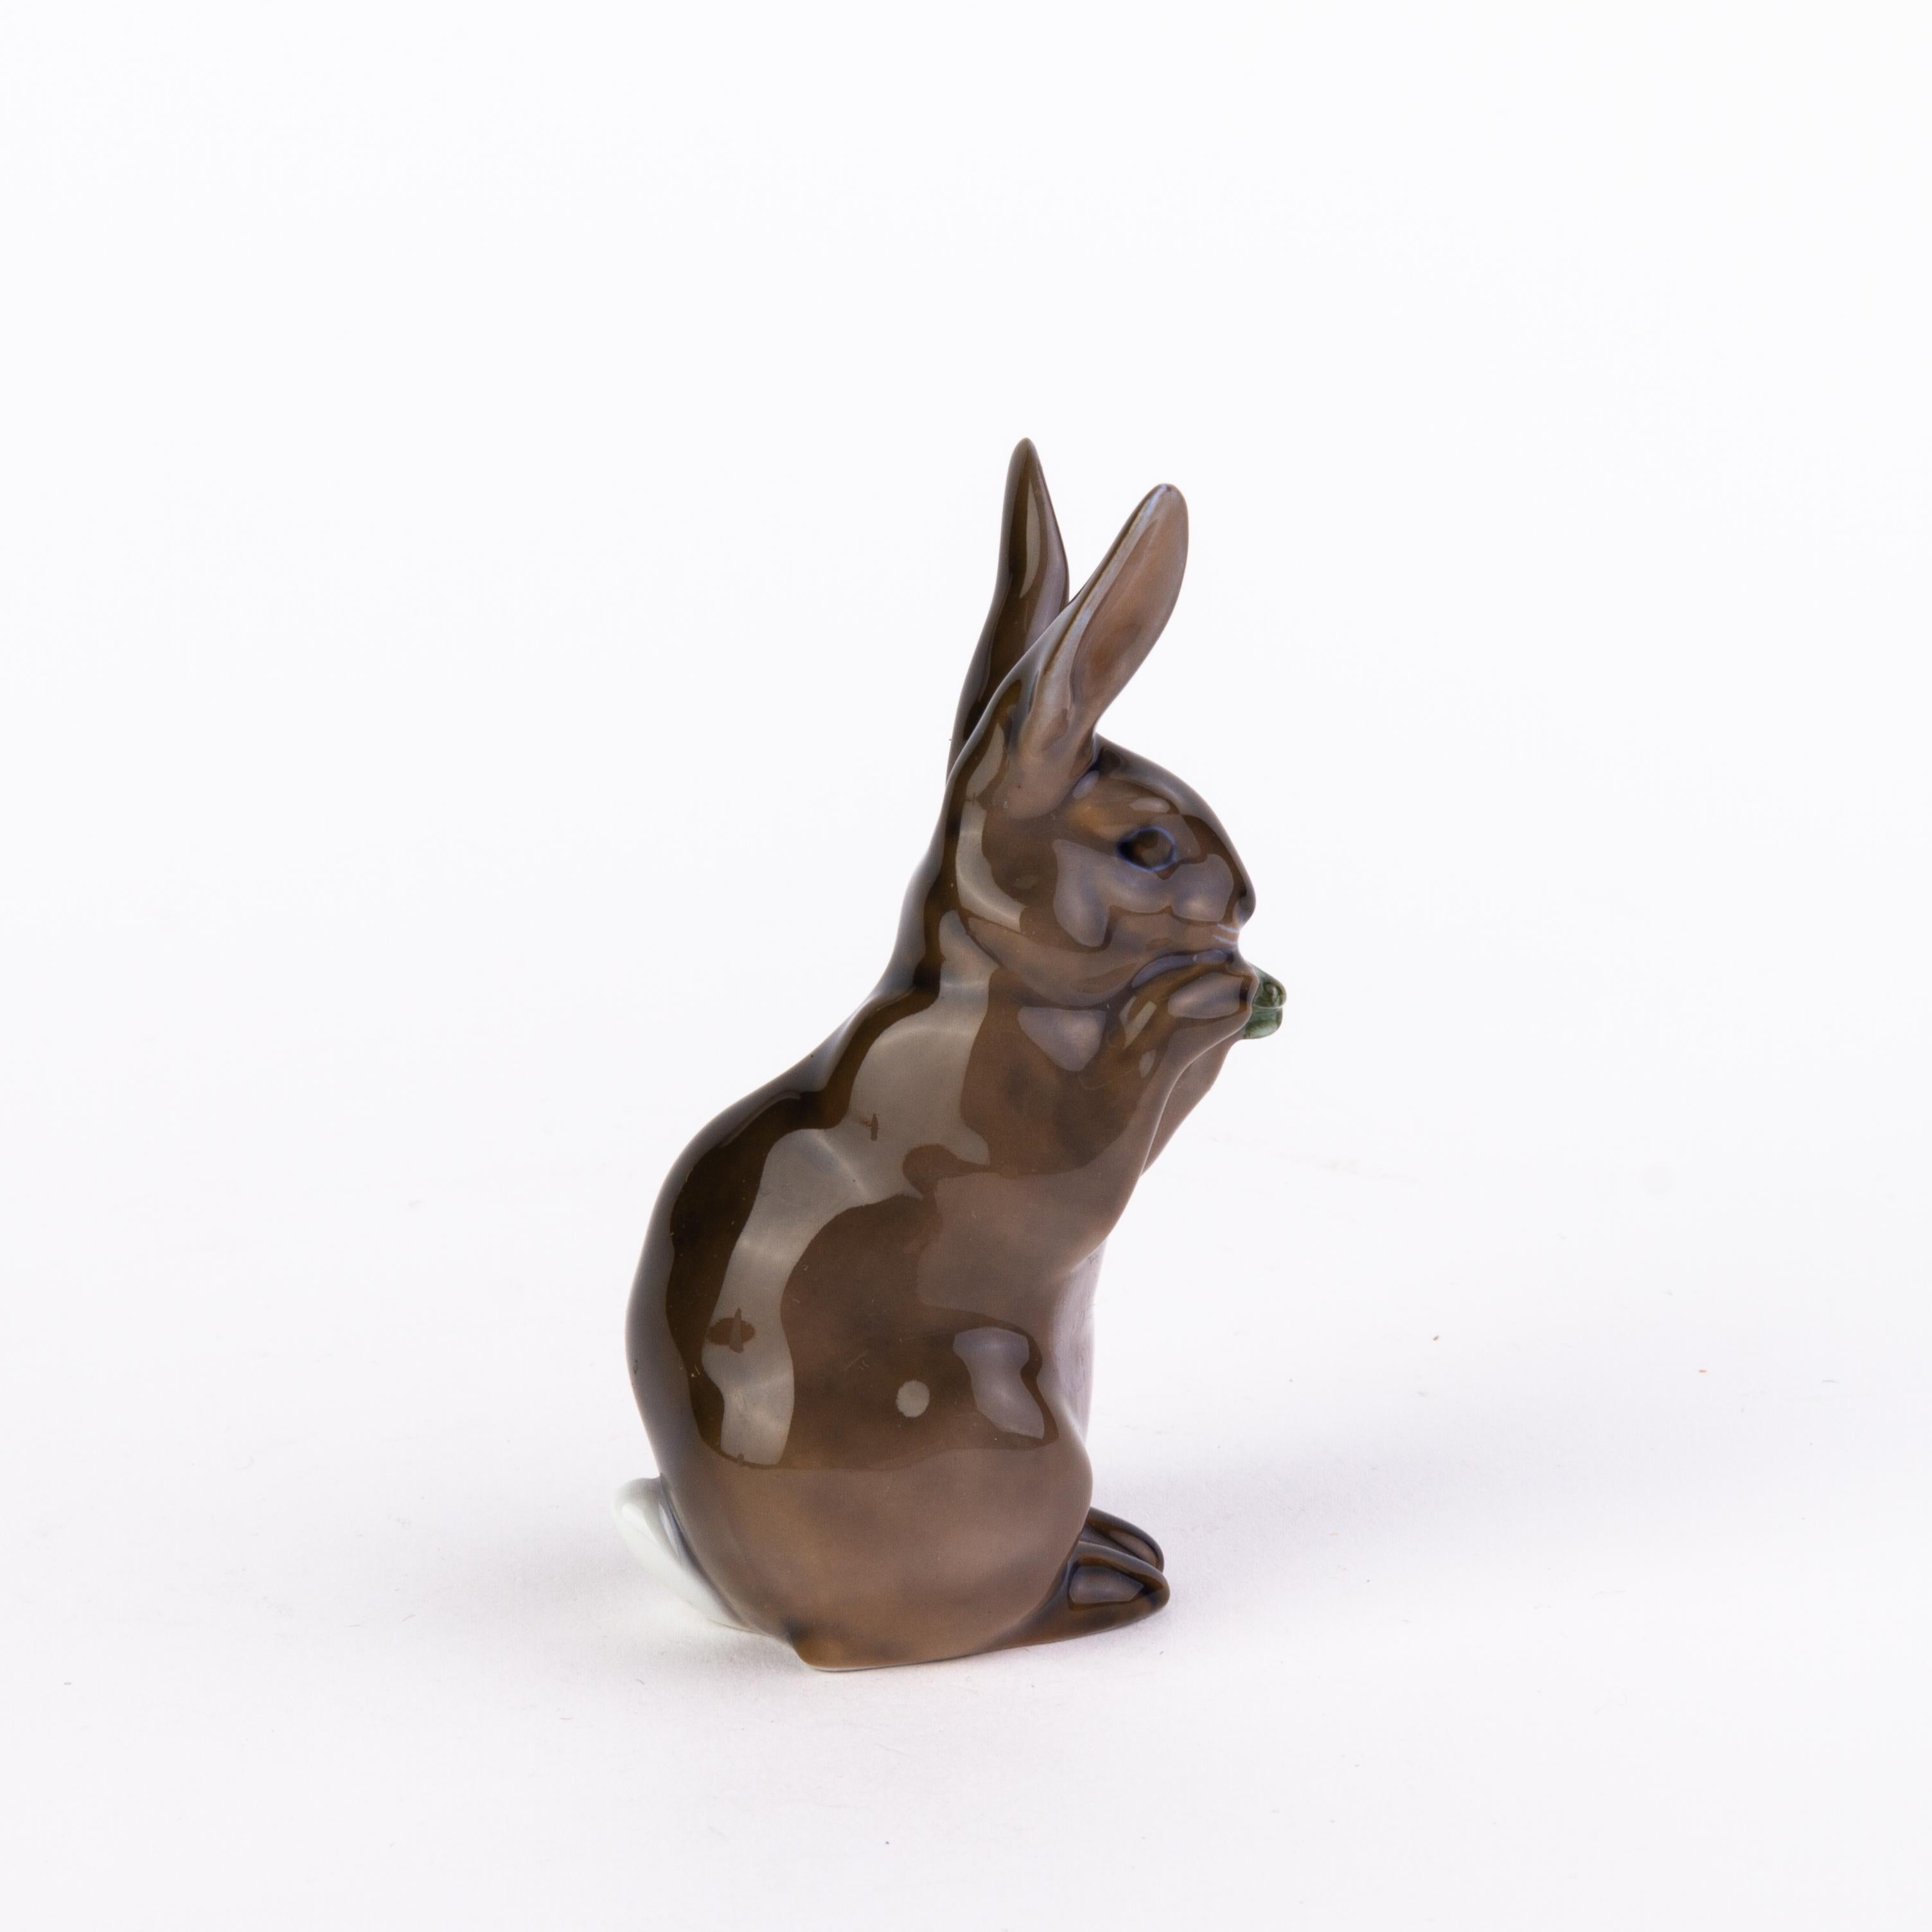 Royal Copenhagen Fine Denmark Porcelain Figure Rabbit 1019
Good condition 
Free international shipping.